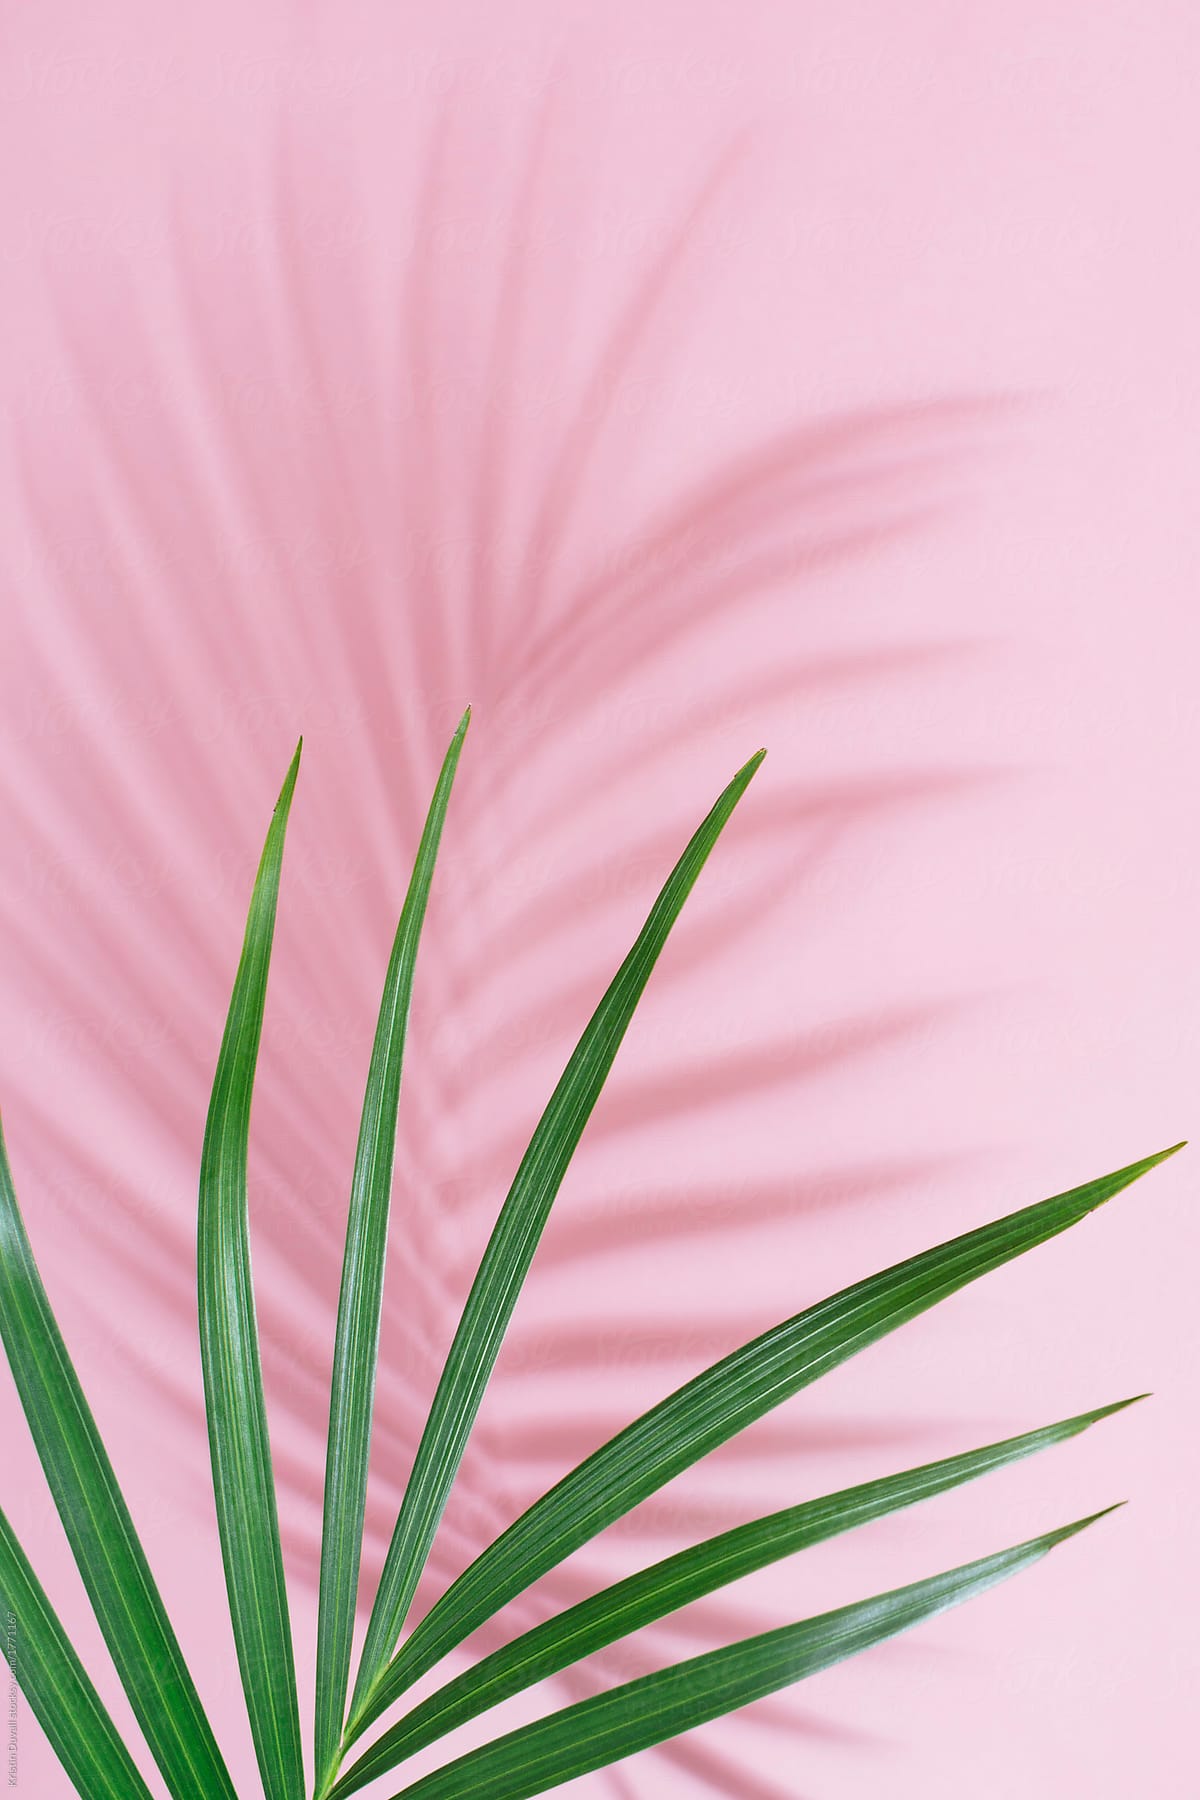 Green palm leaf on pink